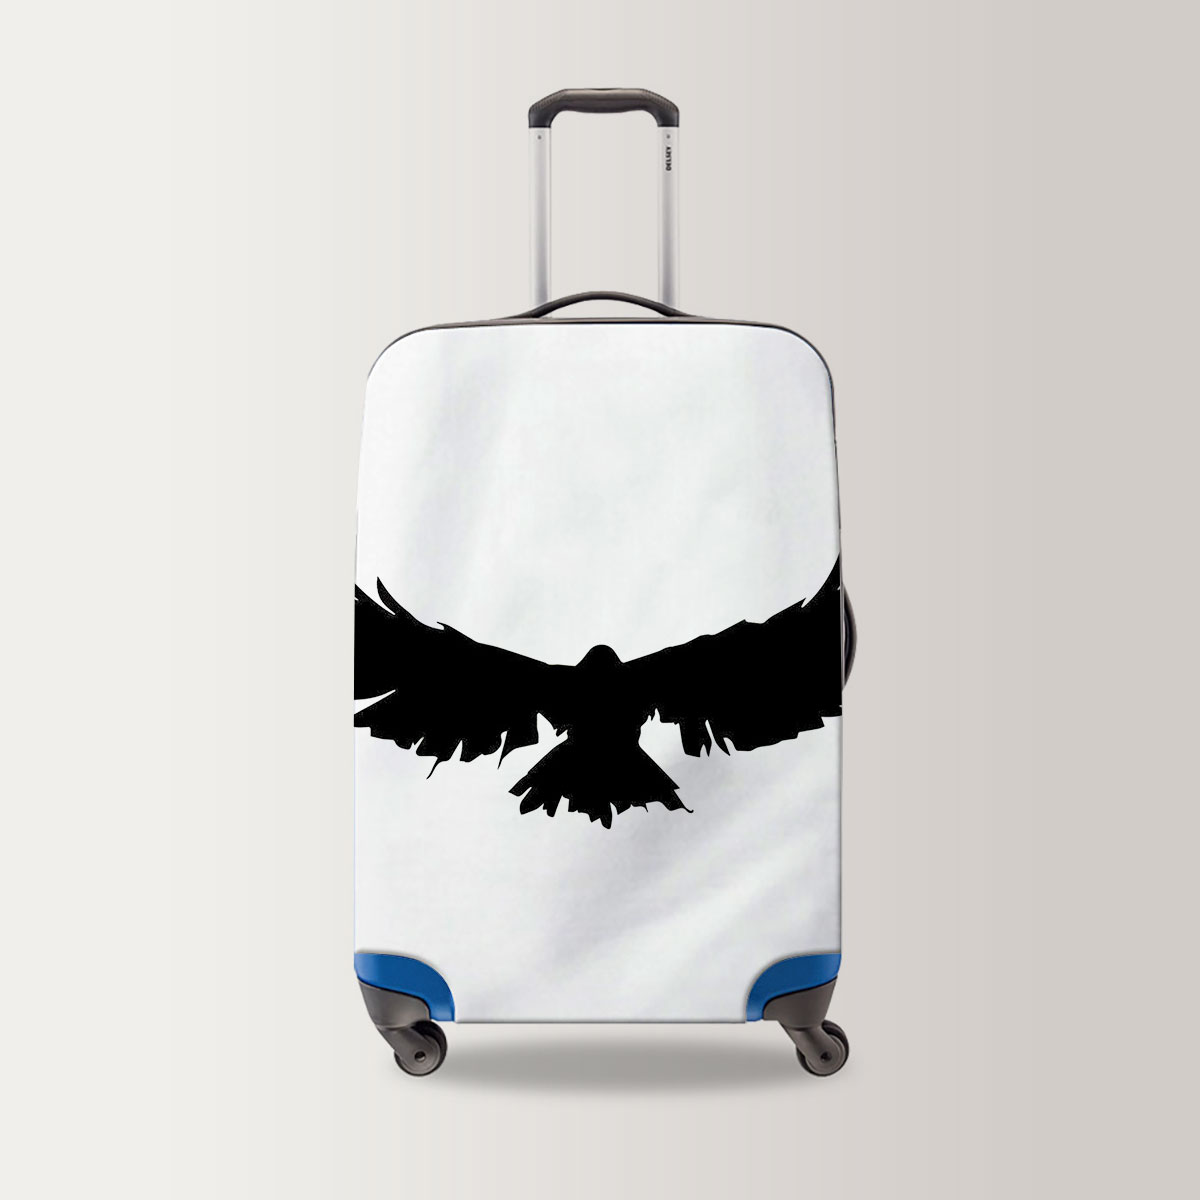 Iconic Black Raven Luggage Bag